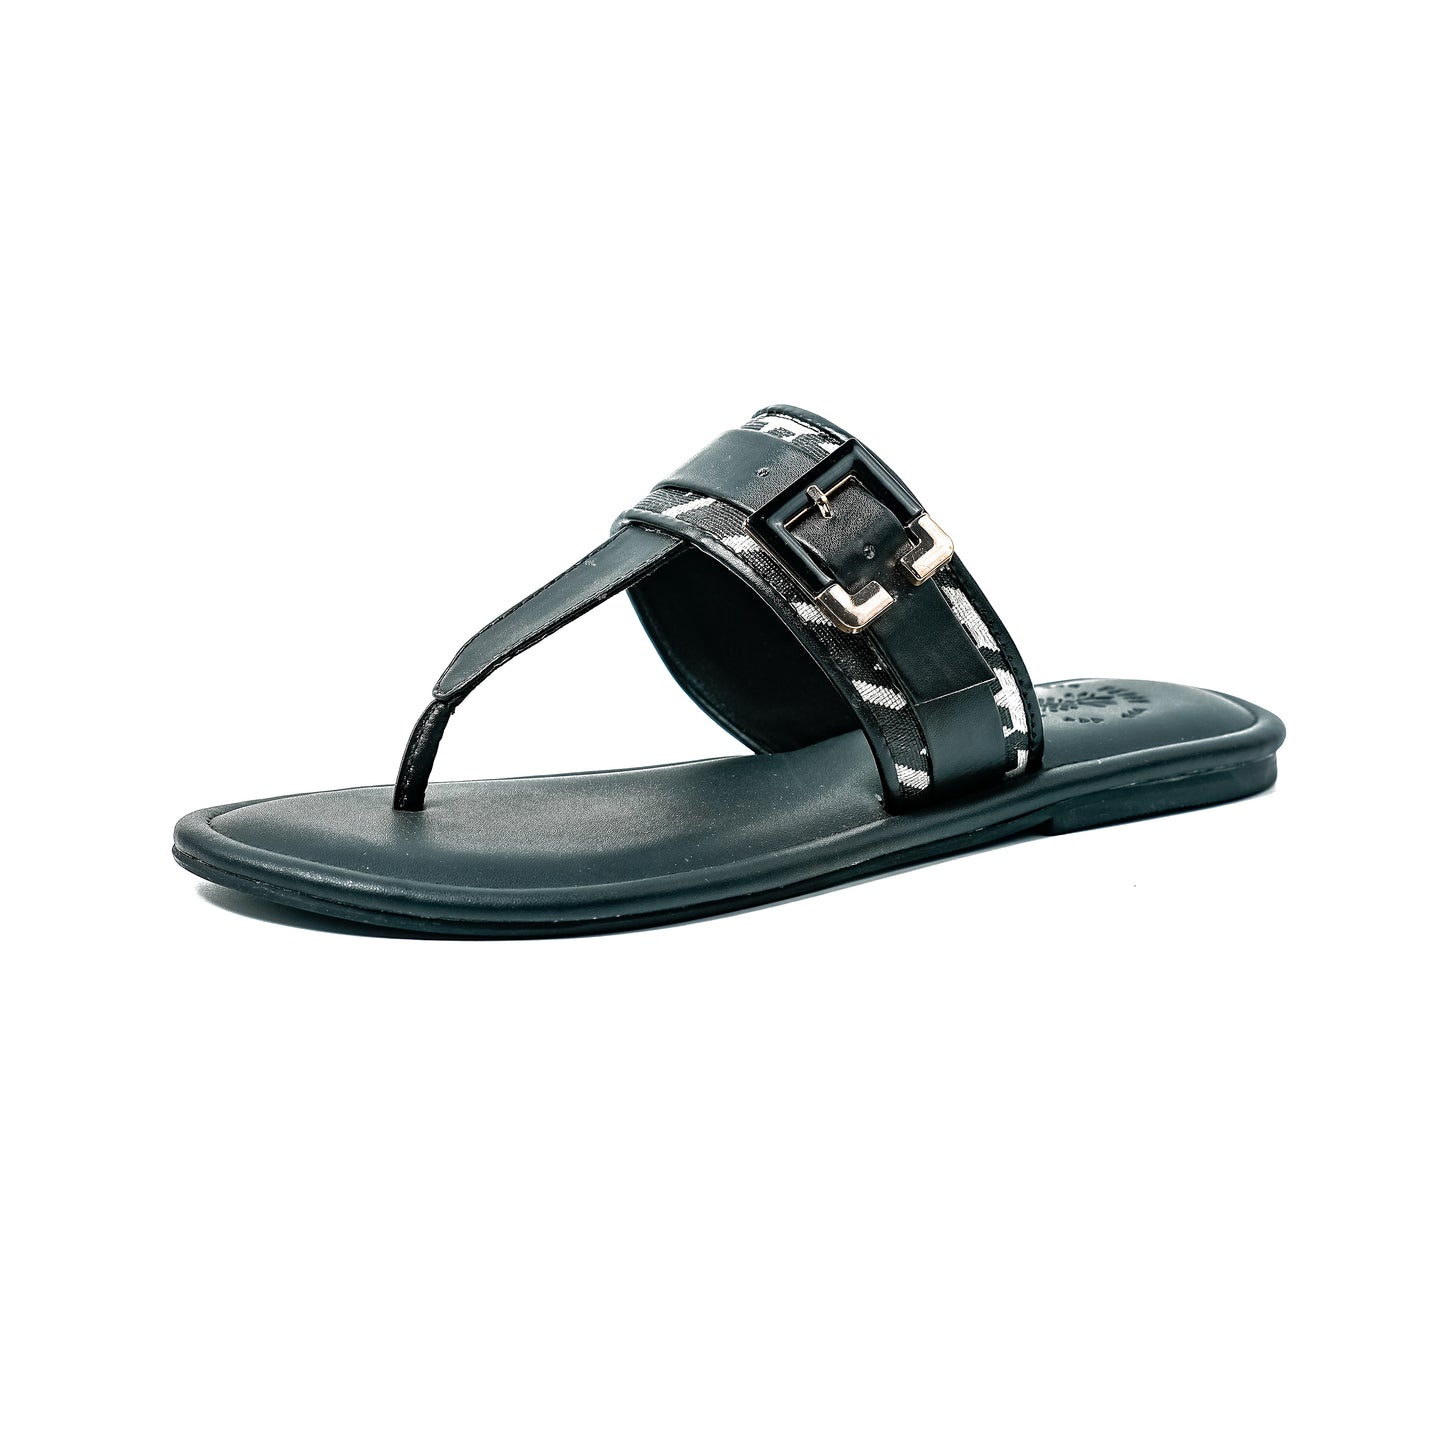 Buckled Thong Sandals - Black